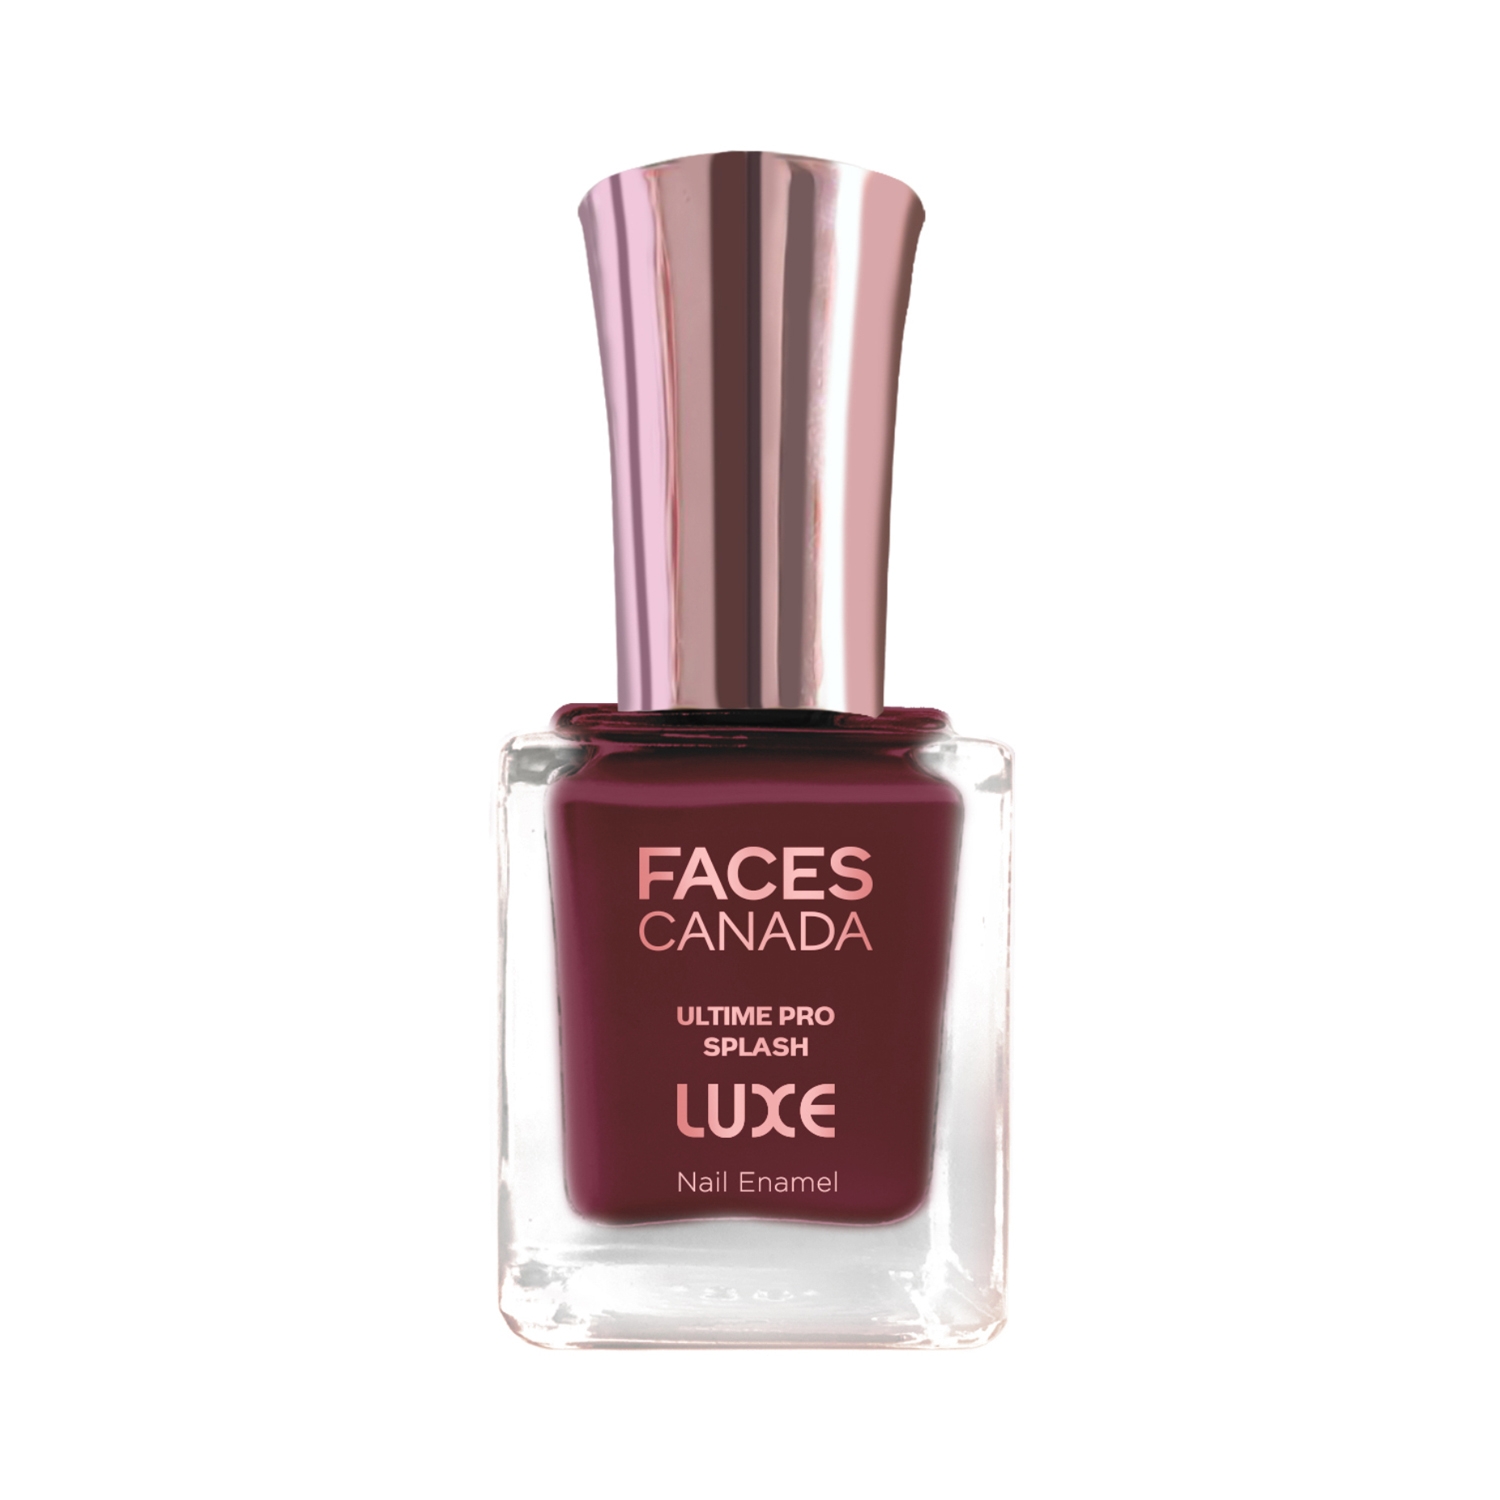 Faces Canada | Faces Canada Ultime Pro Splash Luxe Nail Enamel - L26 Rose Desert (12ml)